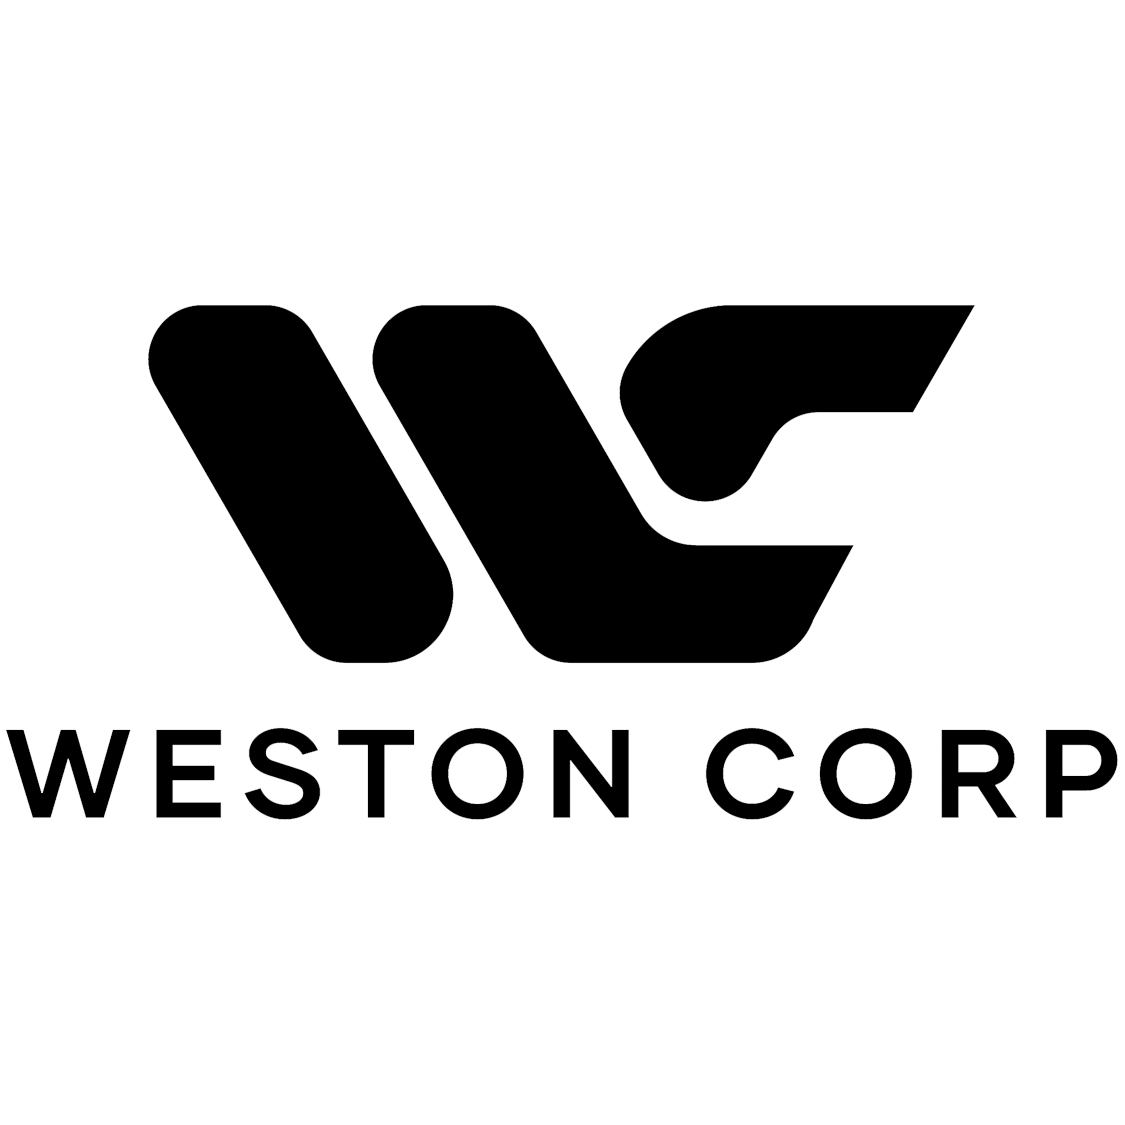 Weston Corp 1125x1125_wclogo.jpg